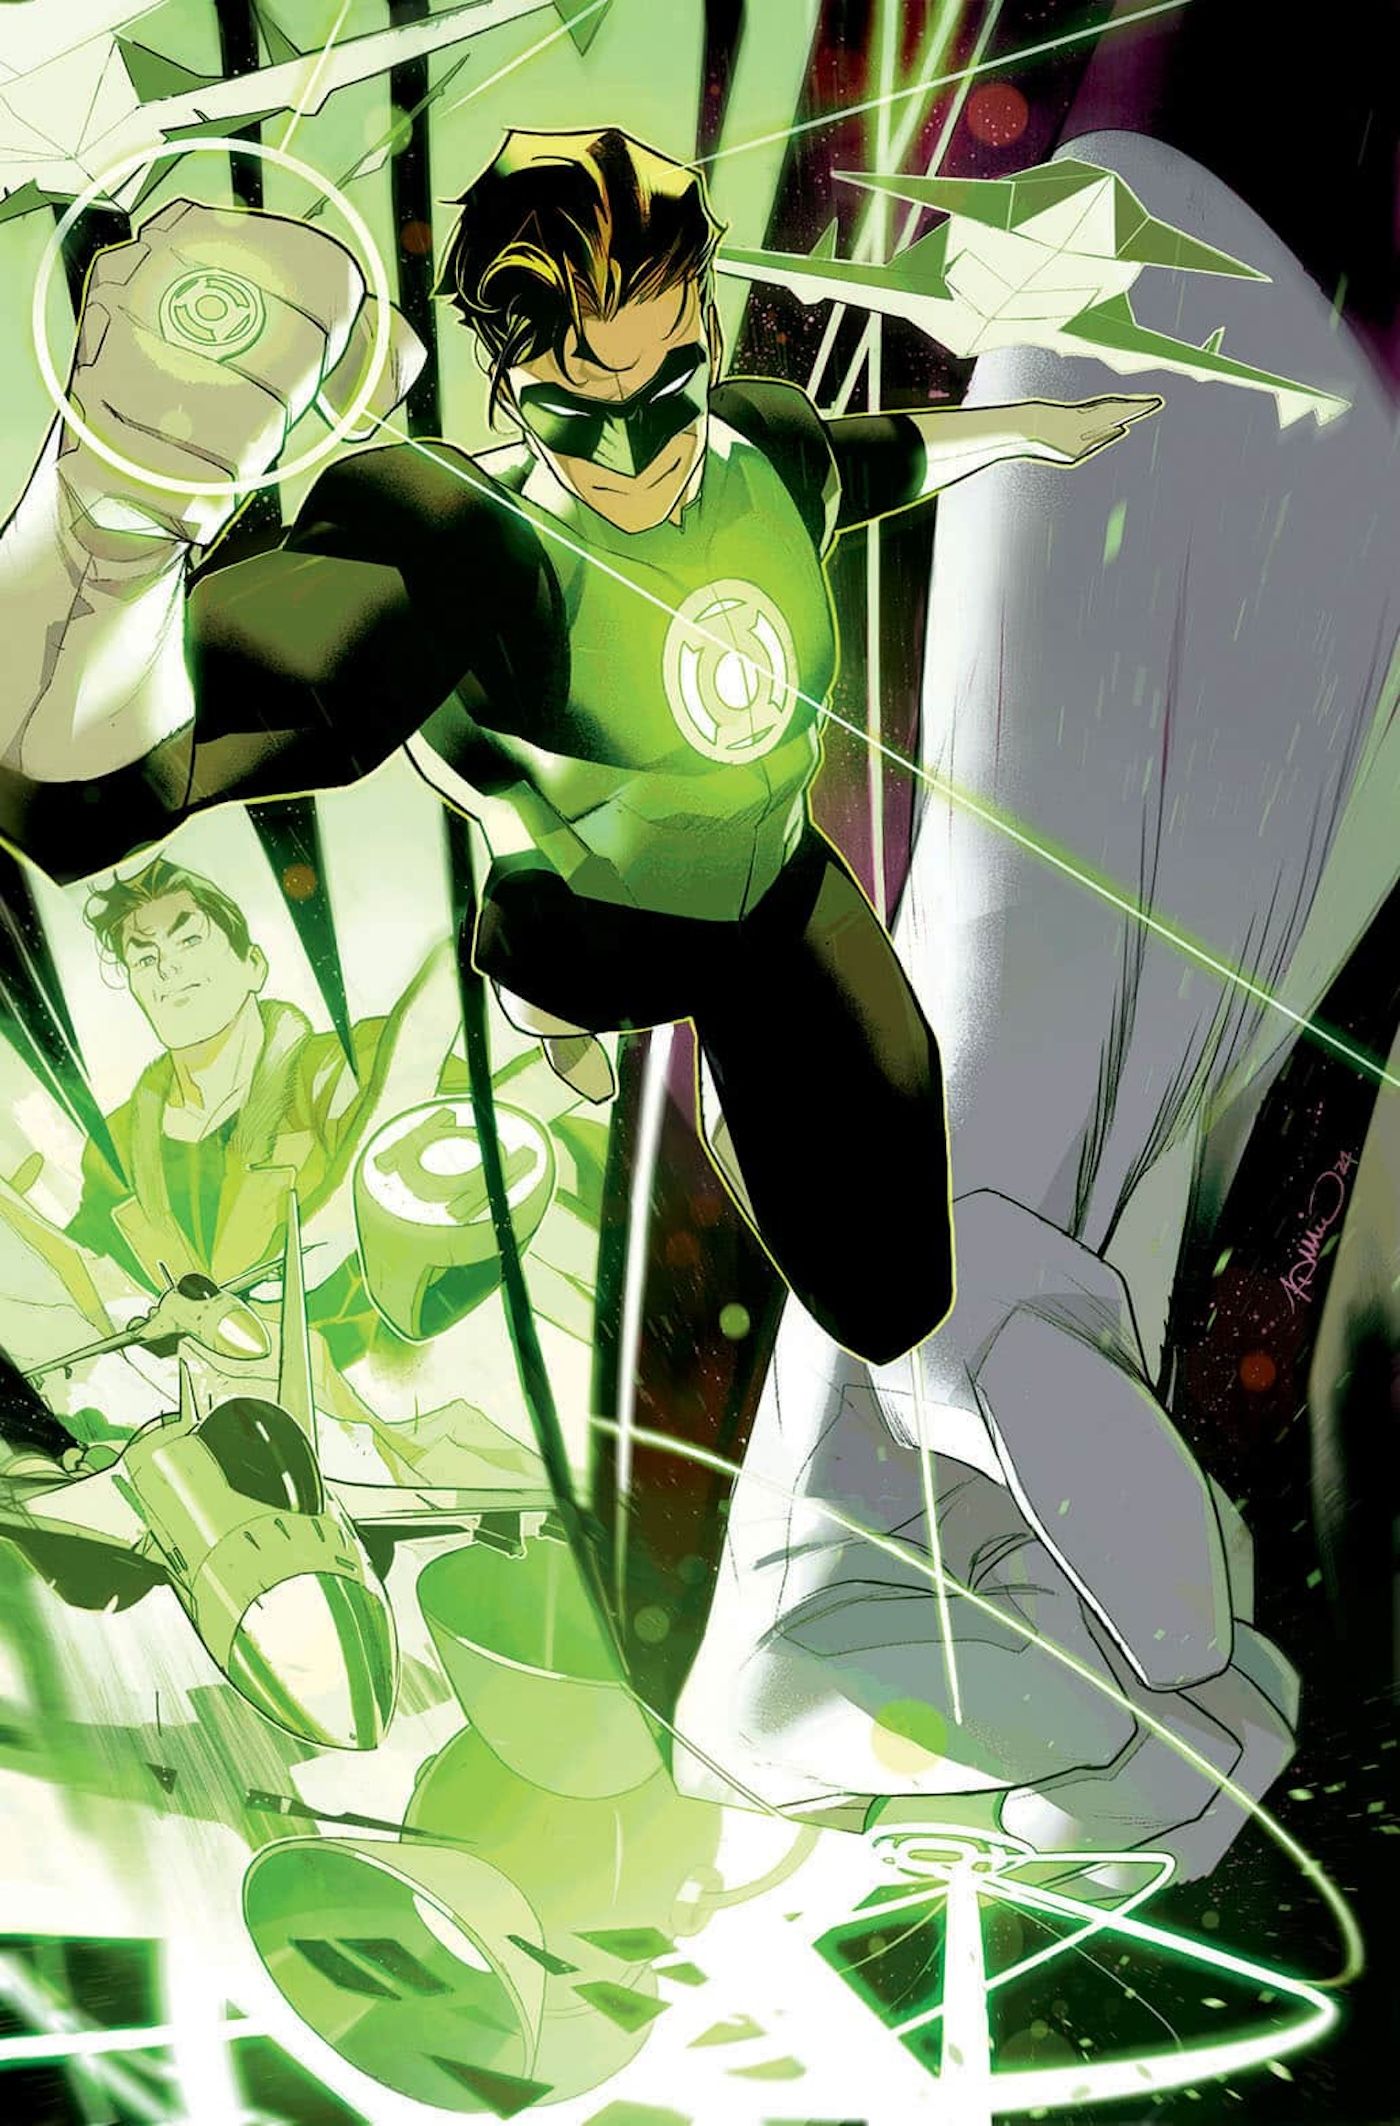 Green Lantern 15 Di Meo Variant Cover: Hal Jordan flying in costume.